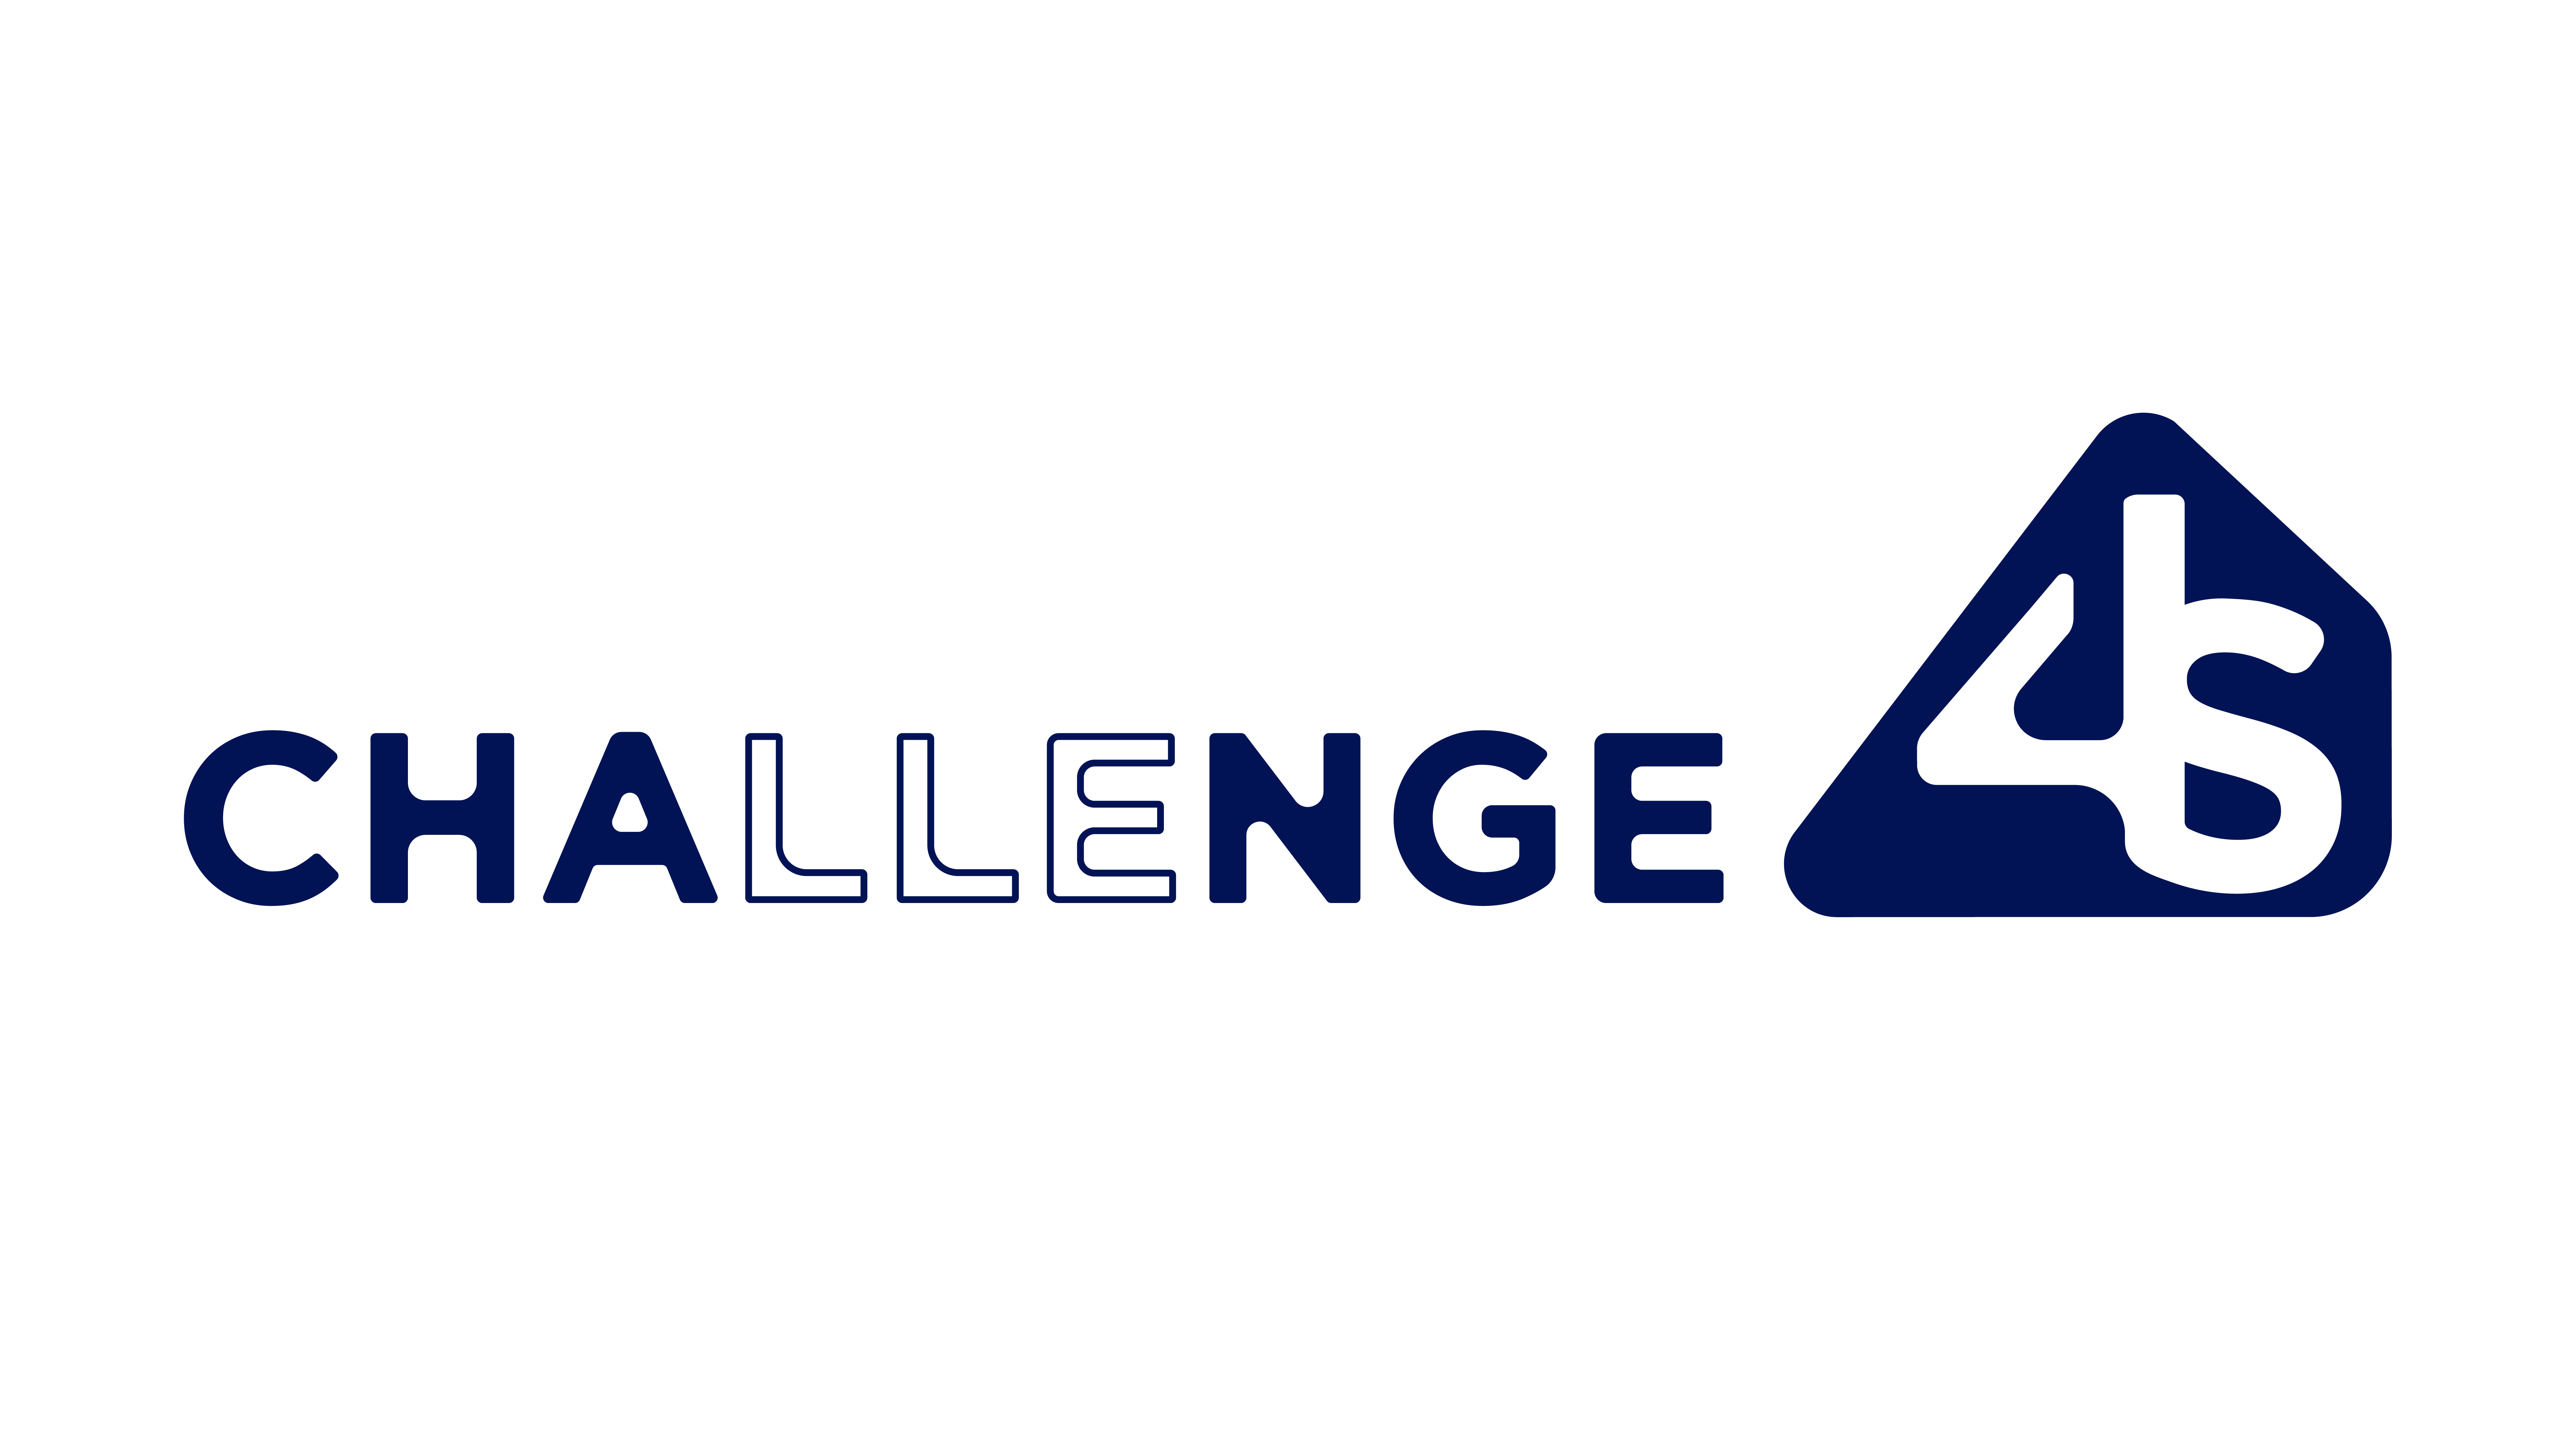 Challenge 4S